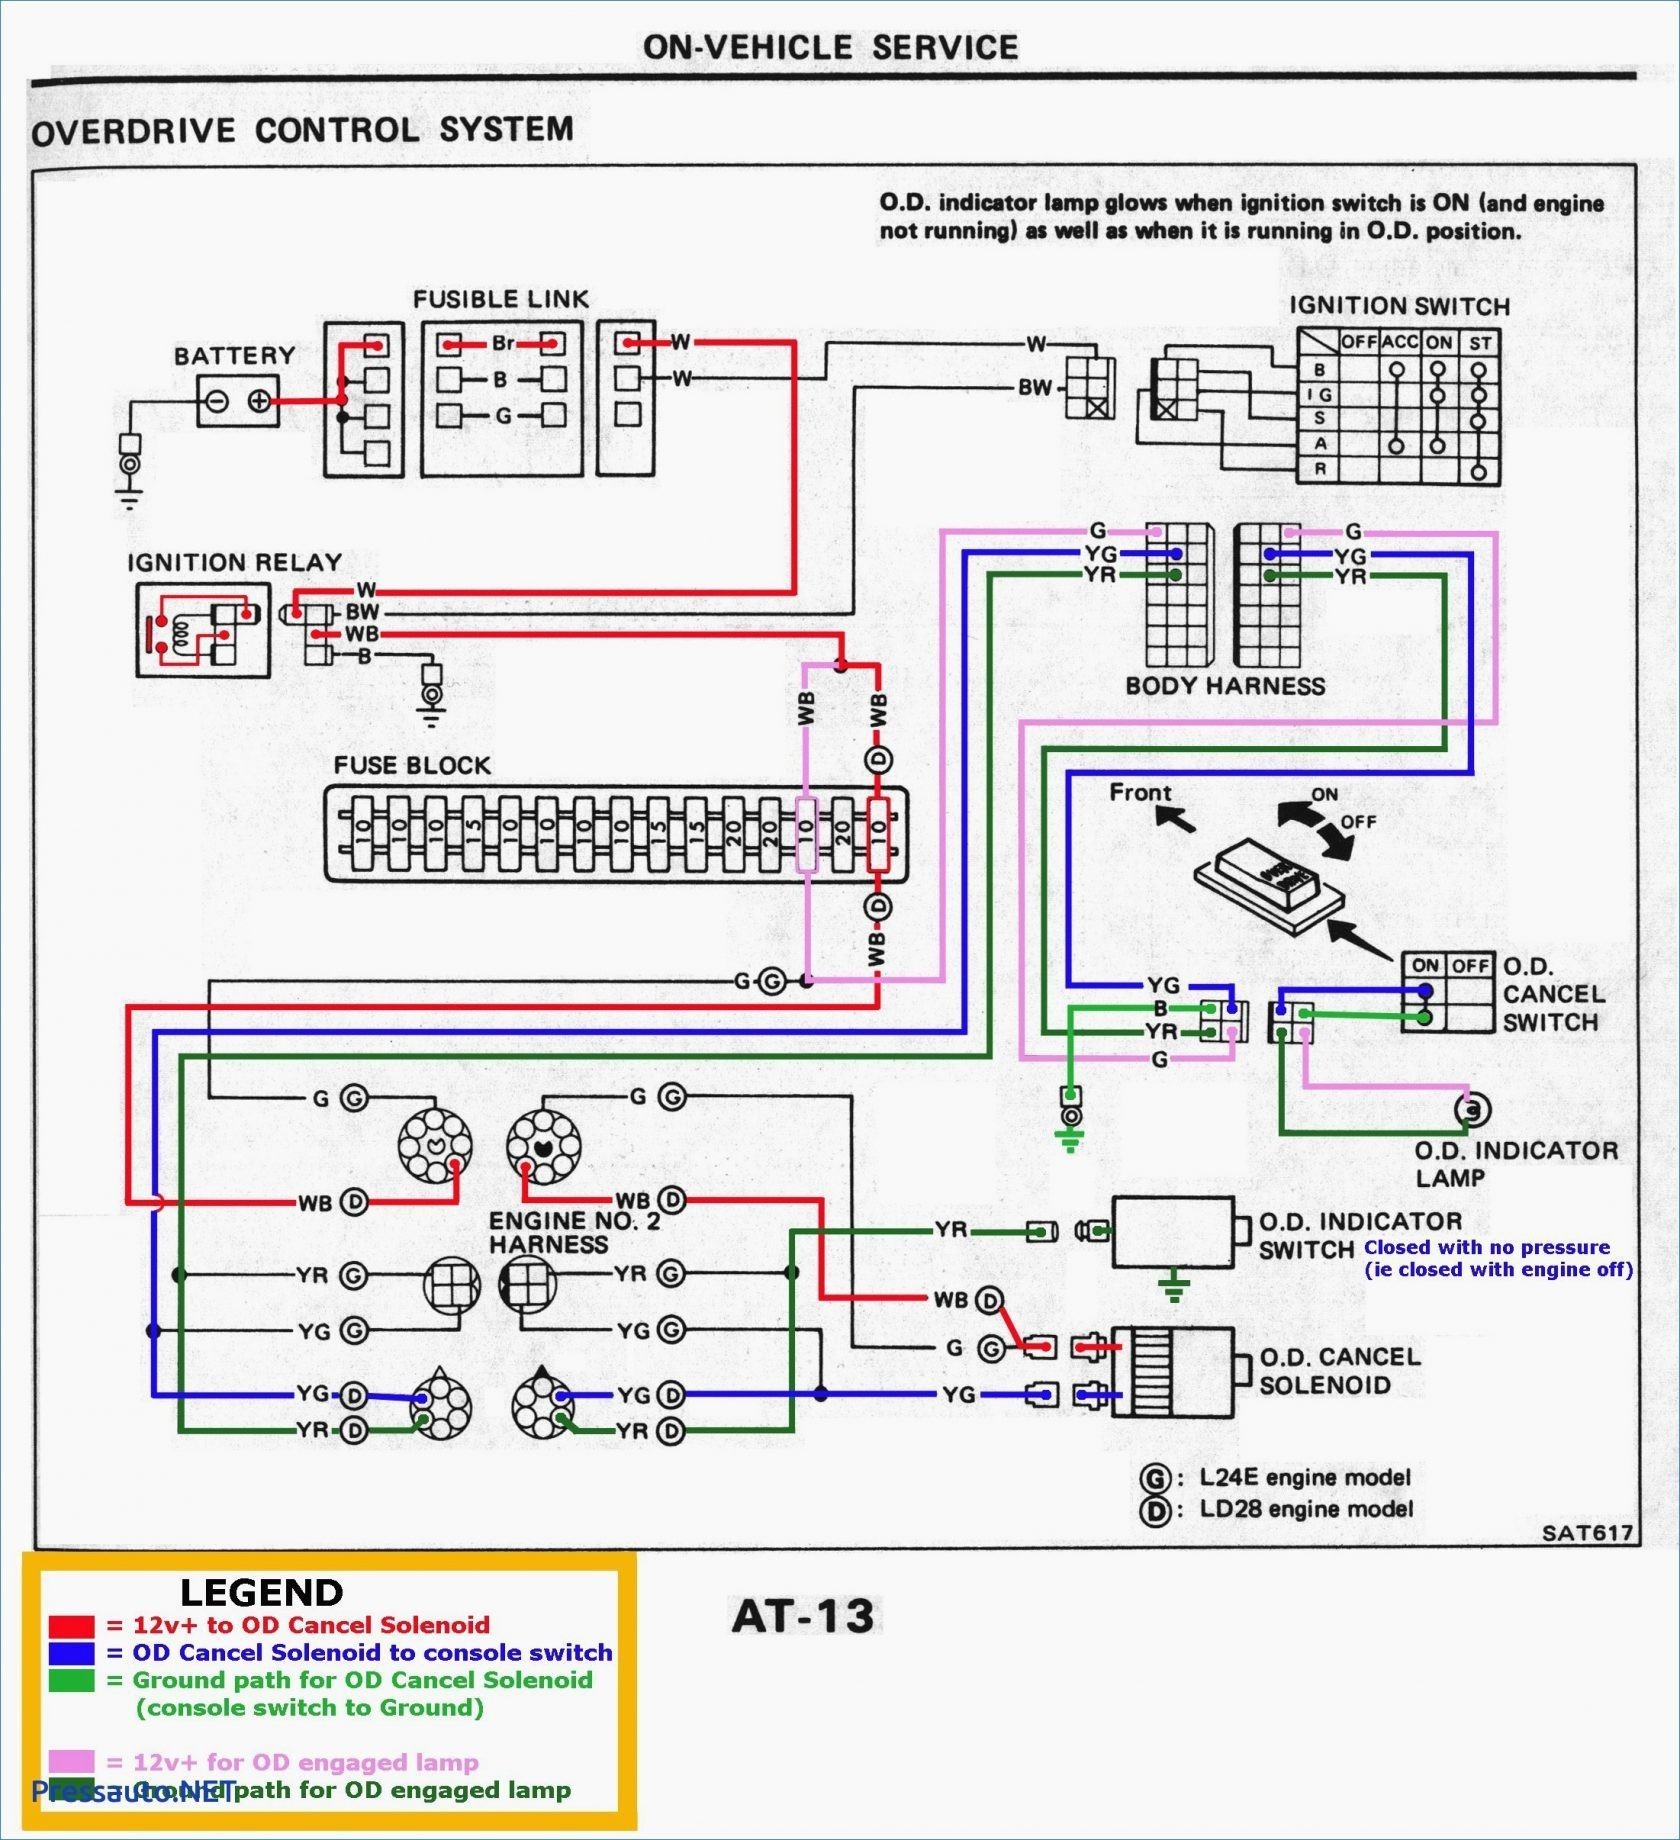 John Deere 318 Wiring Diagram Echlin solenoid Switch Wiring Diagram